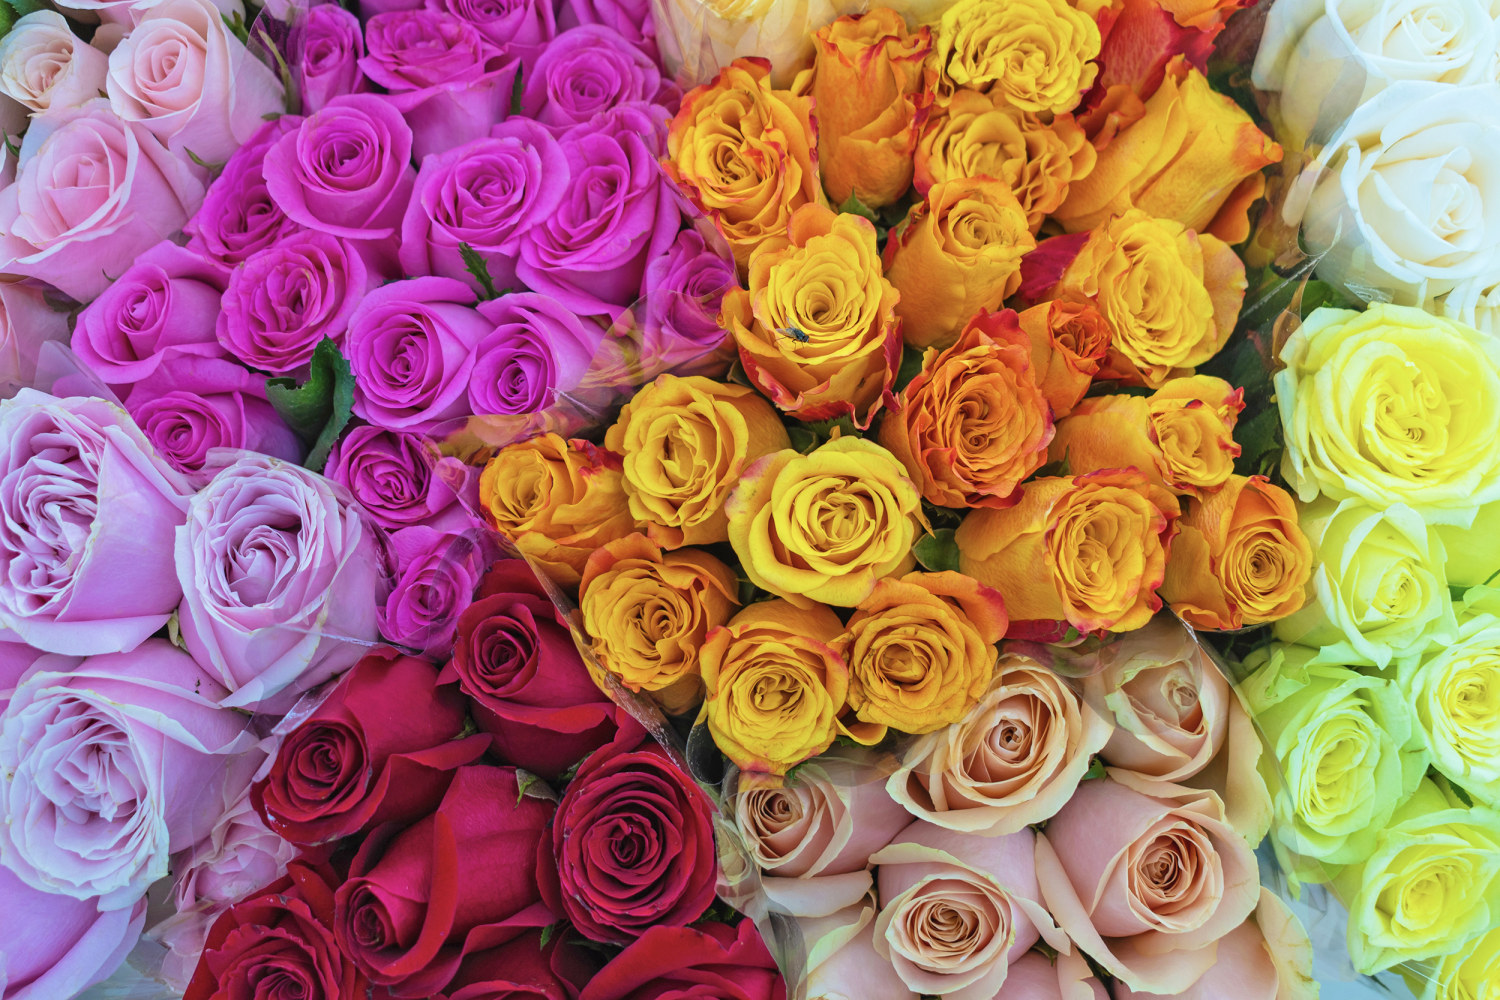 12 Popular Rose Color Meanings - Rose Color Symbolism